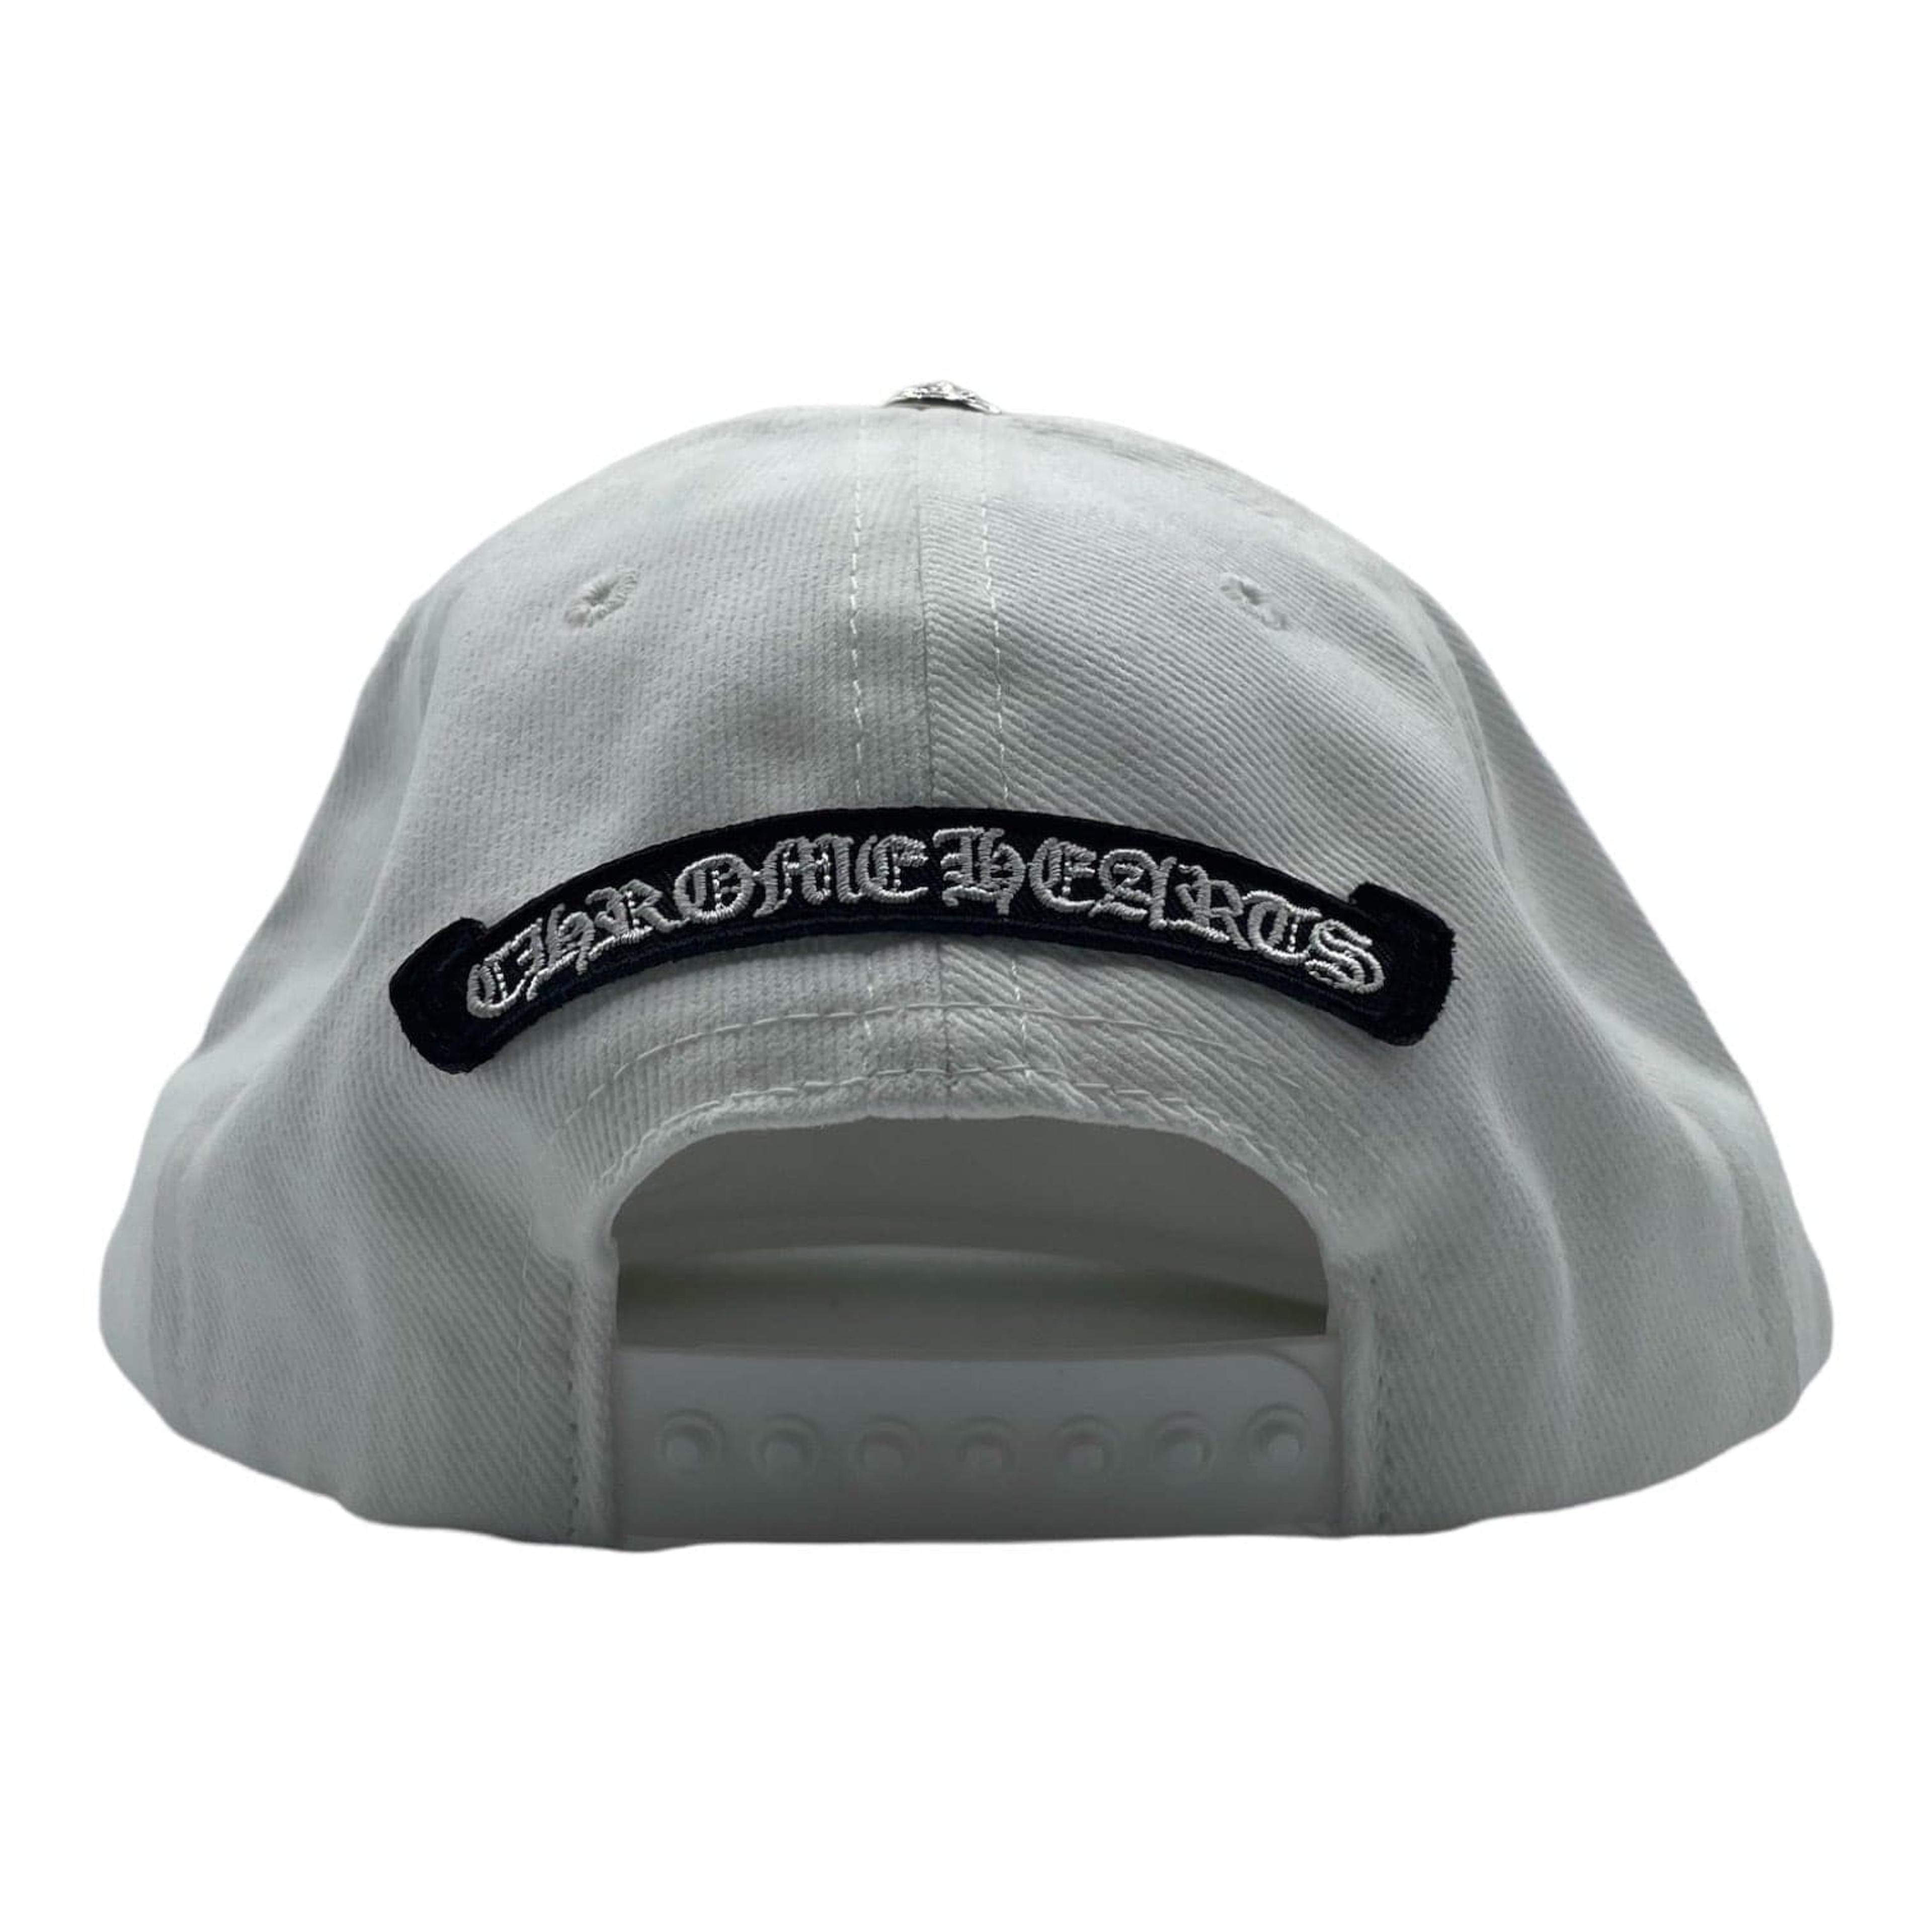 Alternate View 3 of Chrome Hearts Horseshoe Snapback Hat White